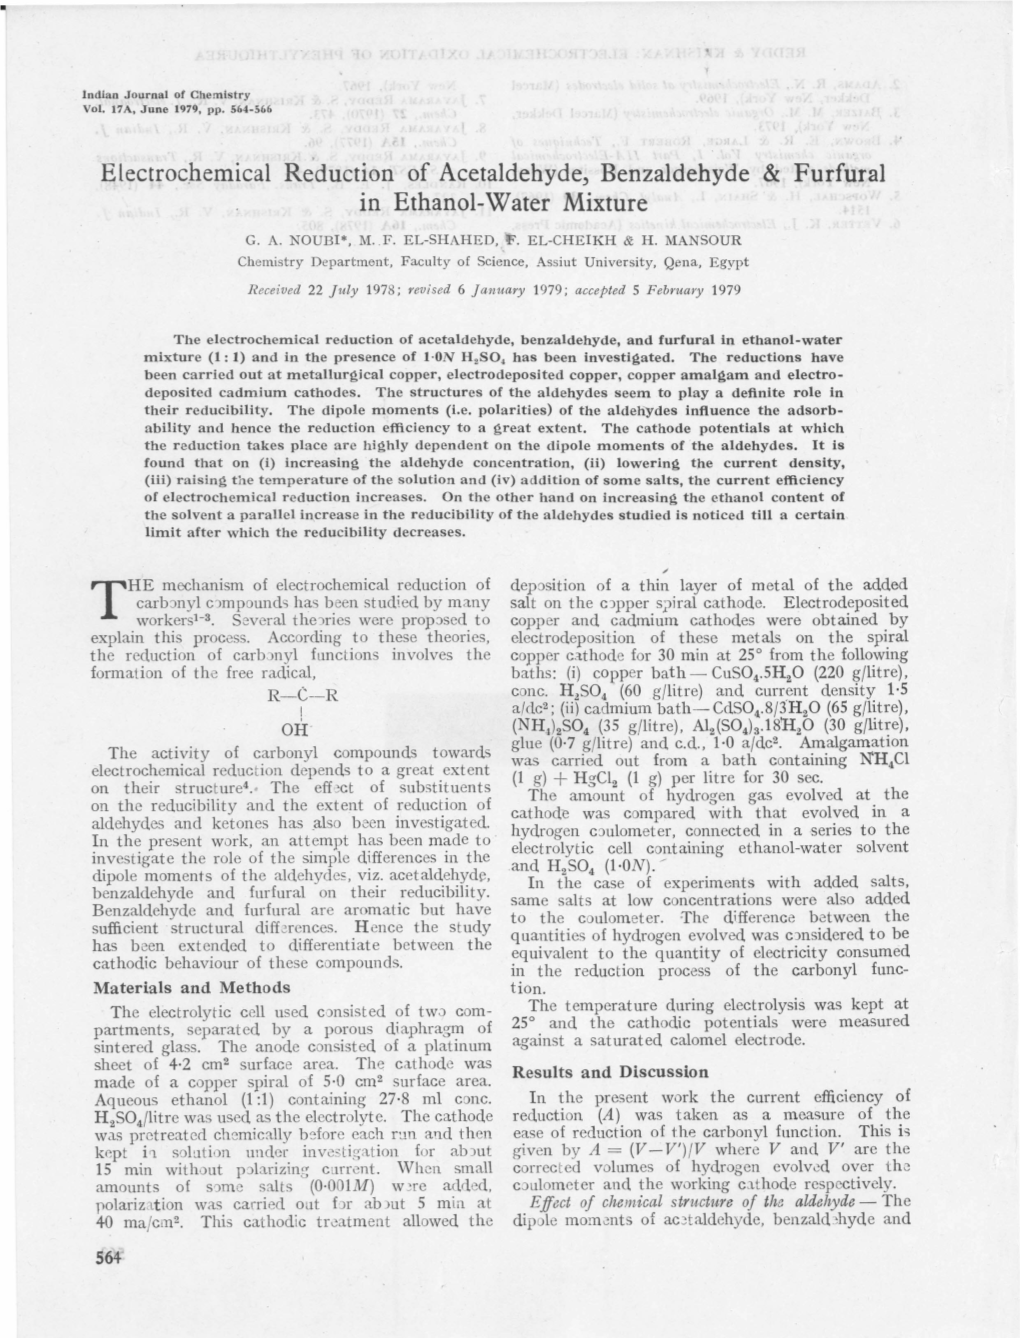 Electrochemical Reduction of Acetaldehyde, Benzaldehyde & Furfural in Ethanol-Water Mixture